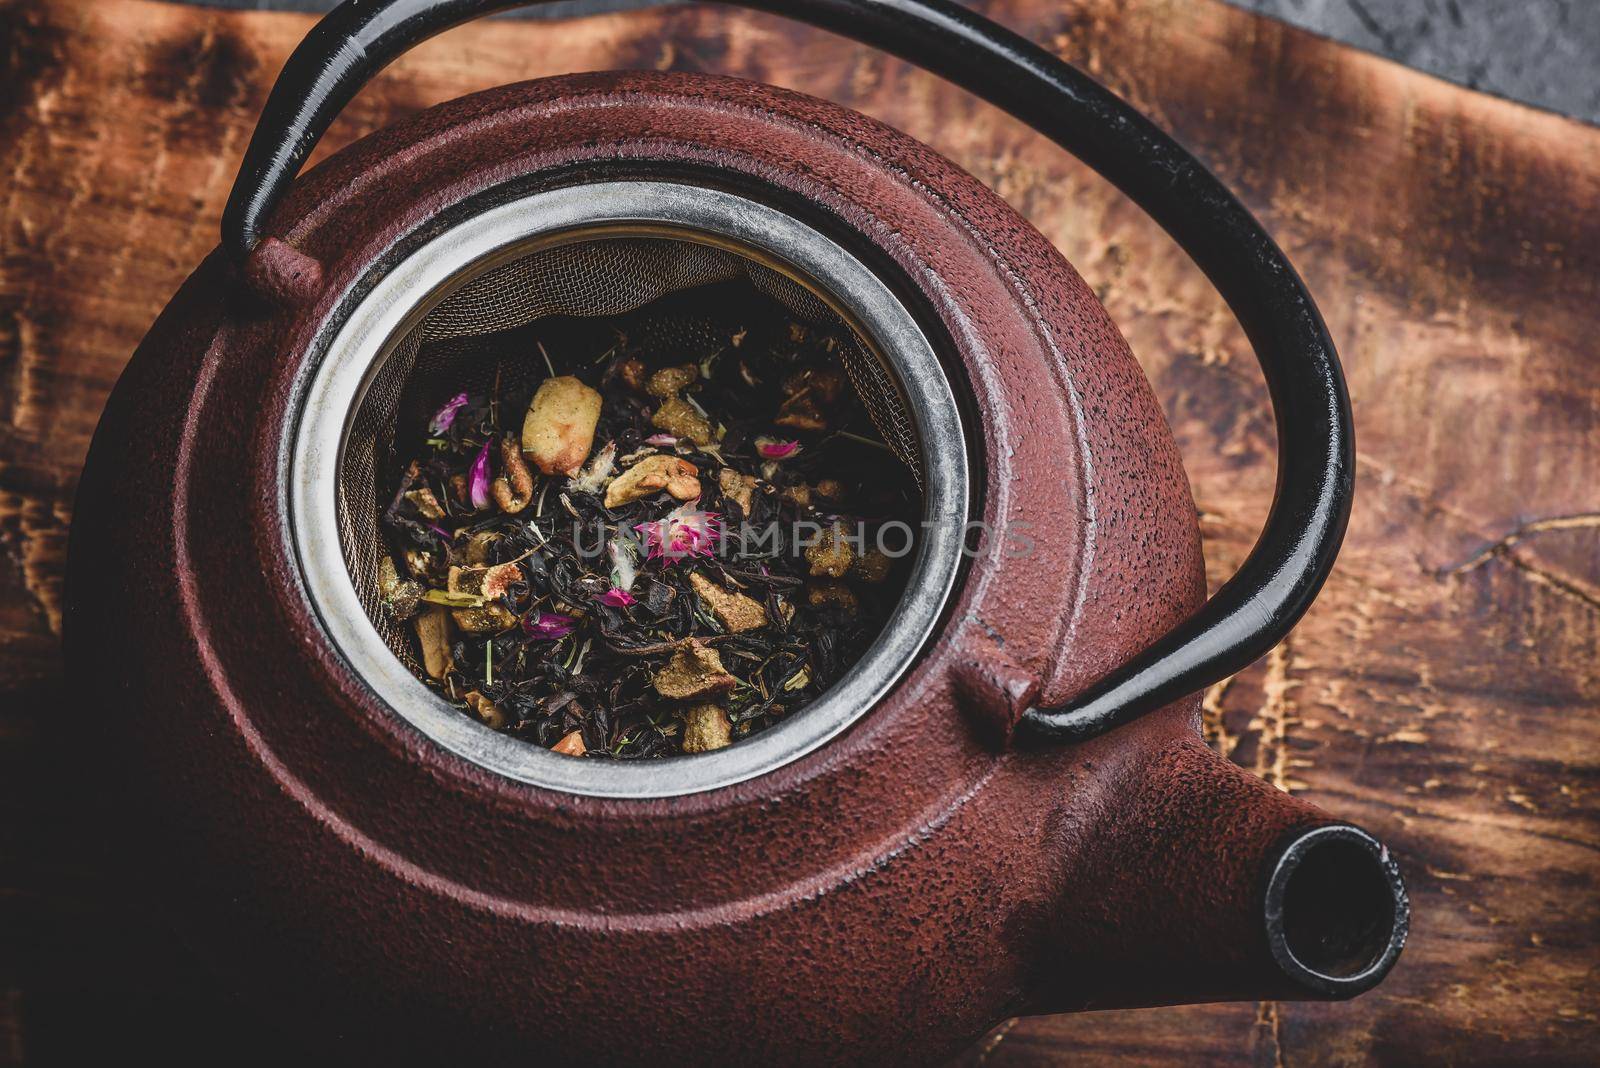 Preparing herbal tea by Seva_blsv